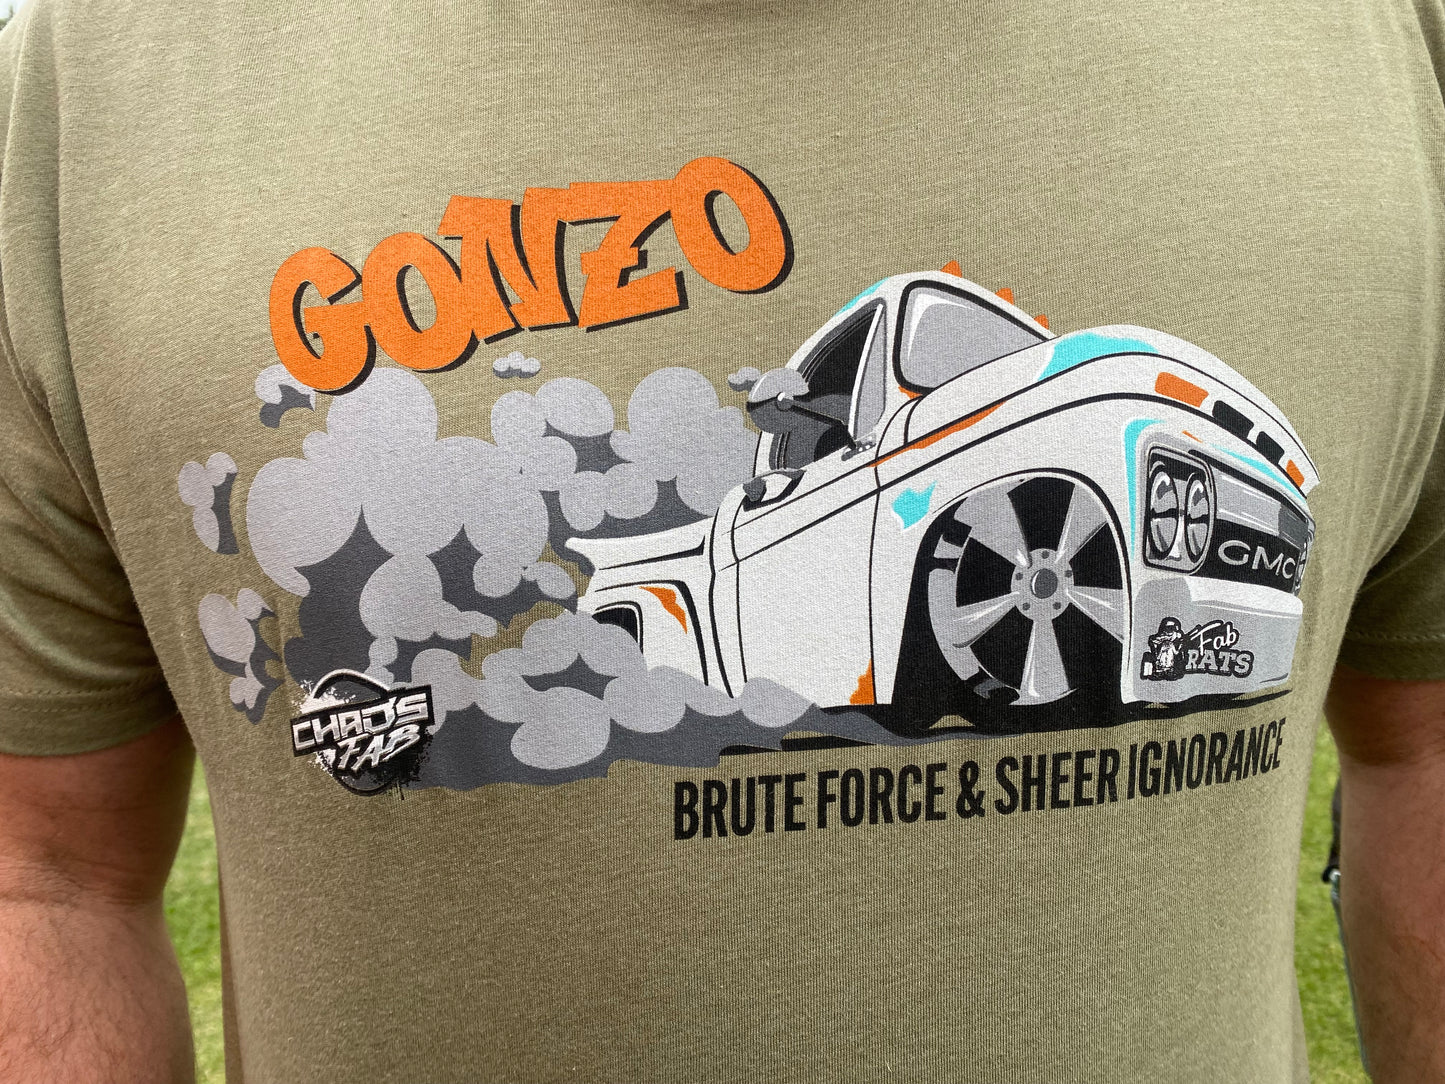 GONZO - Brute Force & Sheer Ignorance T-shirt